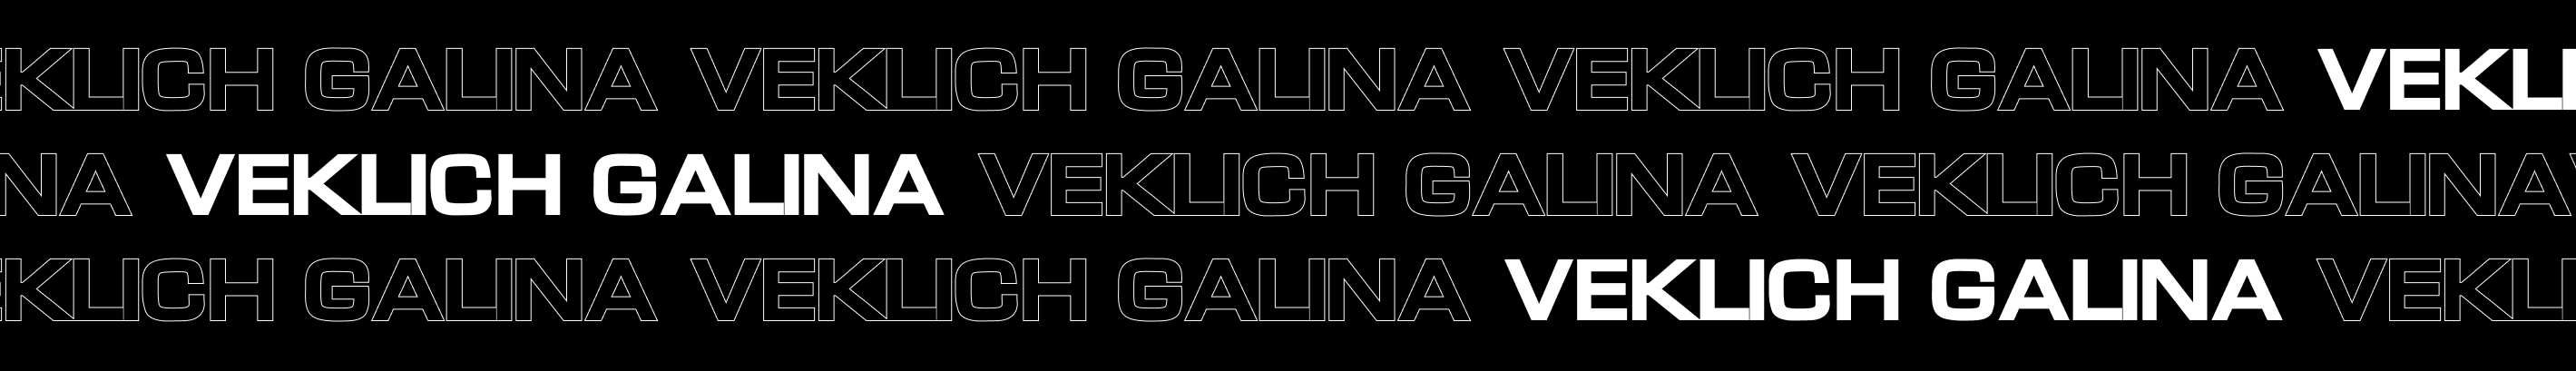 Galina Veklich's profile banner